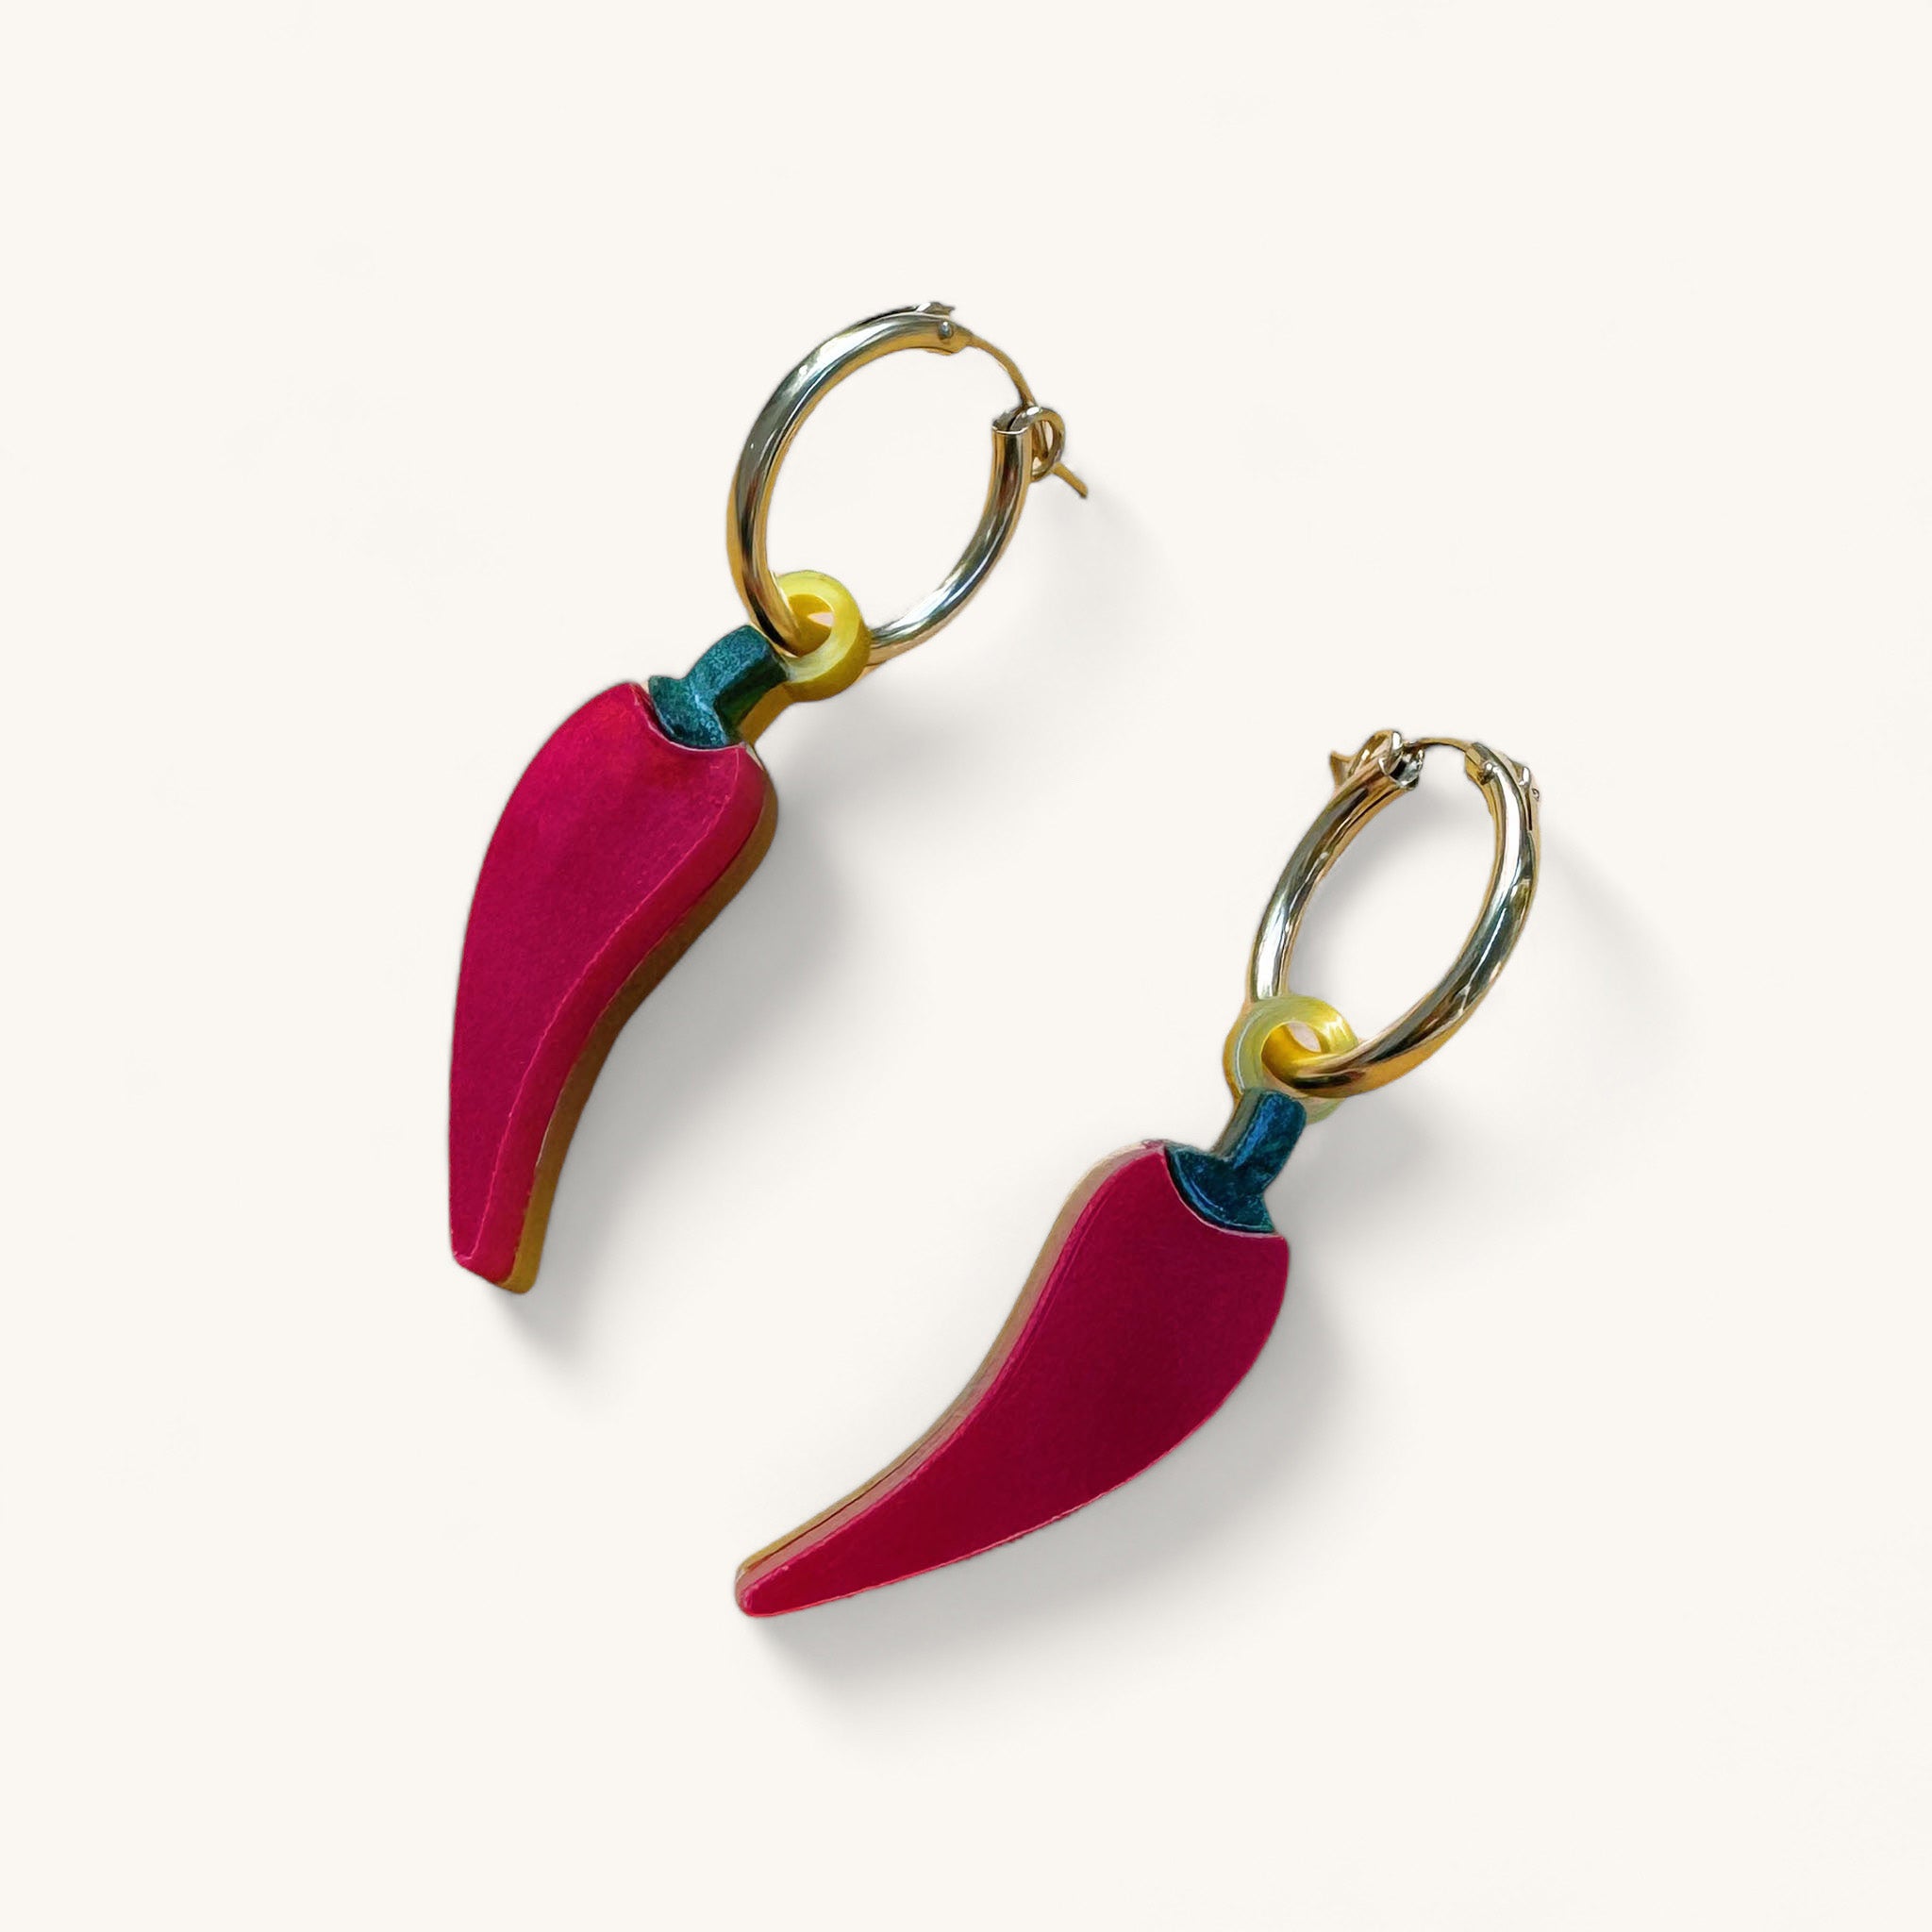 Jennifer Loiselle chilli earrings with gold filled hoops